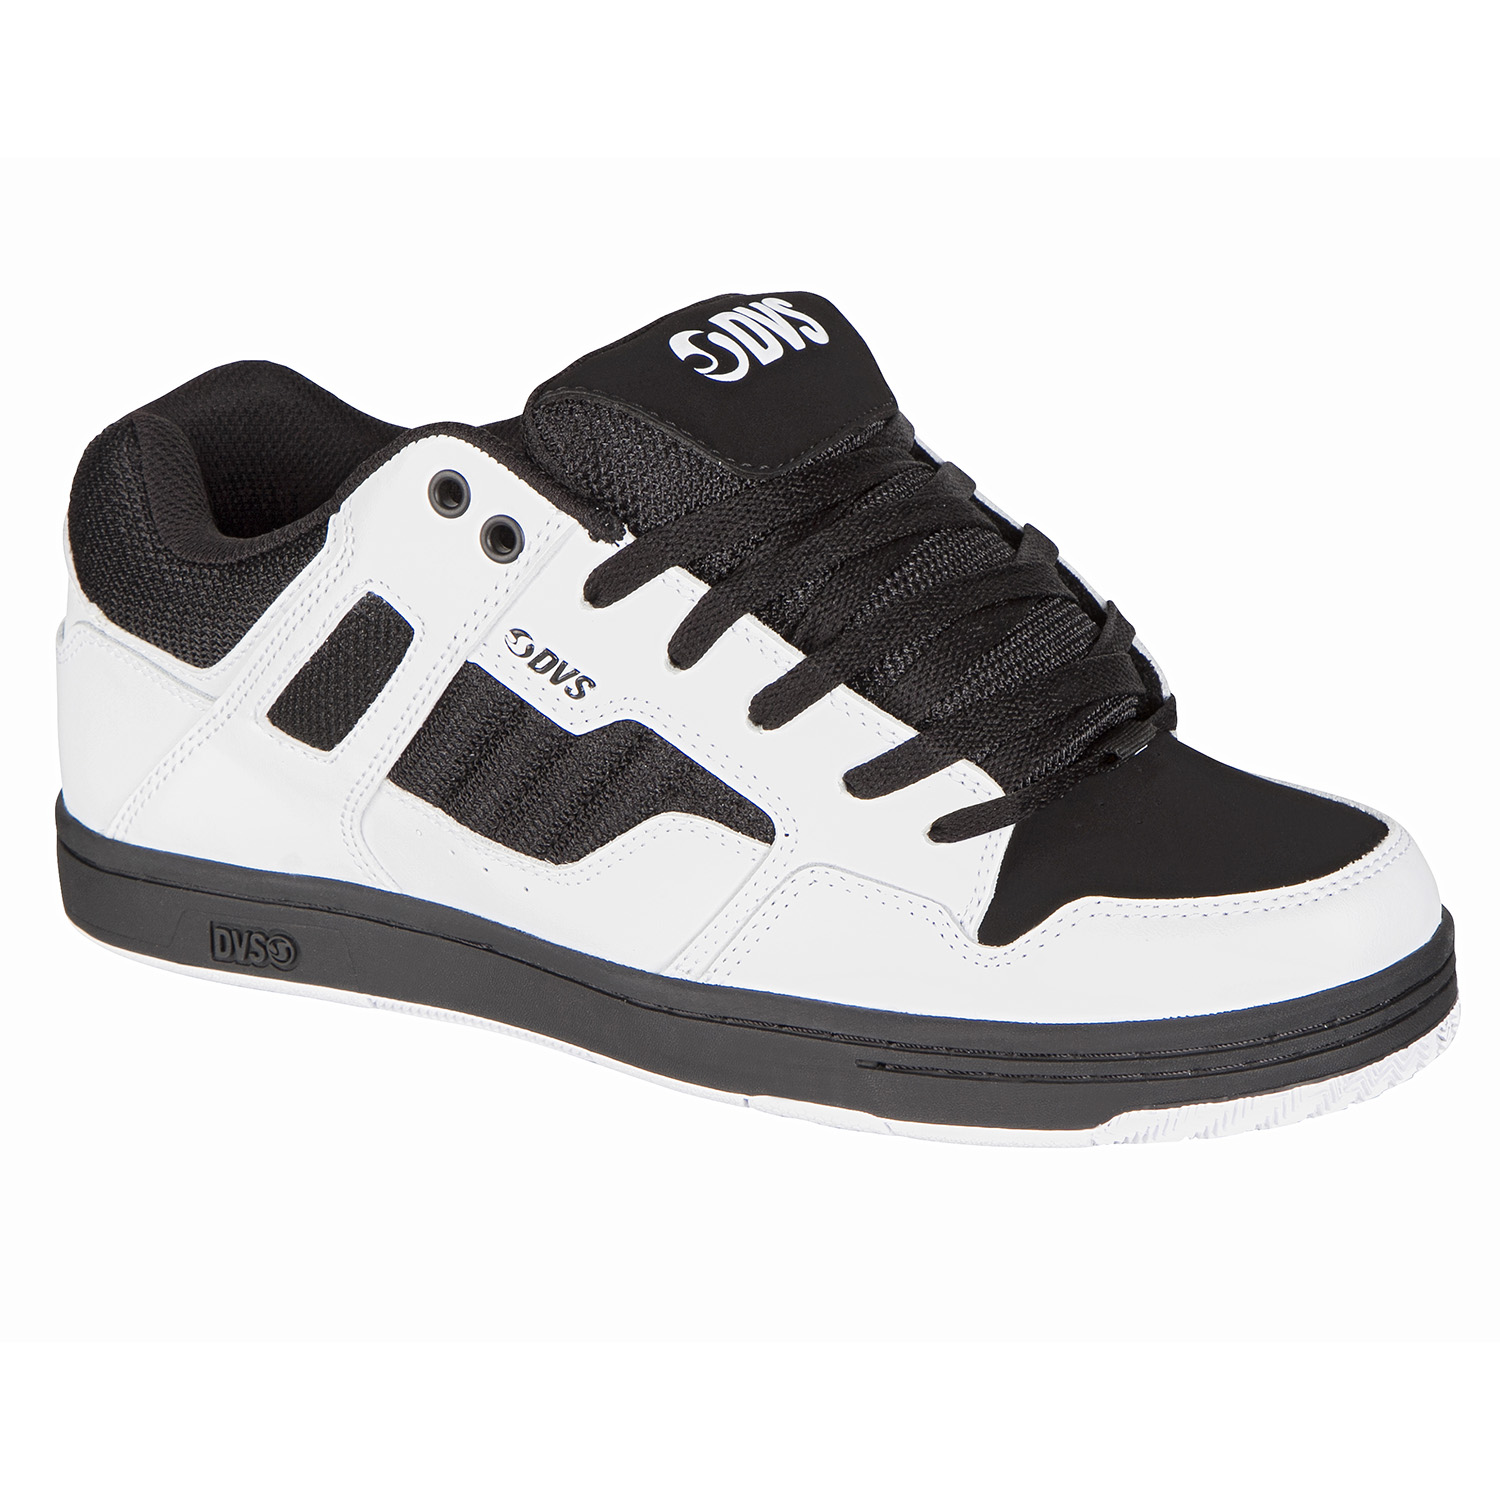 DVS Shoes Enduro 125 White/Black Leather